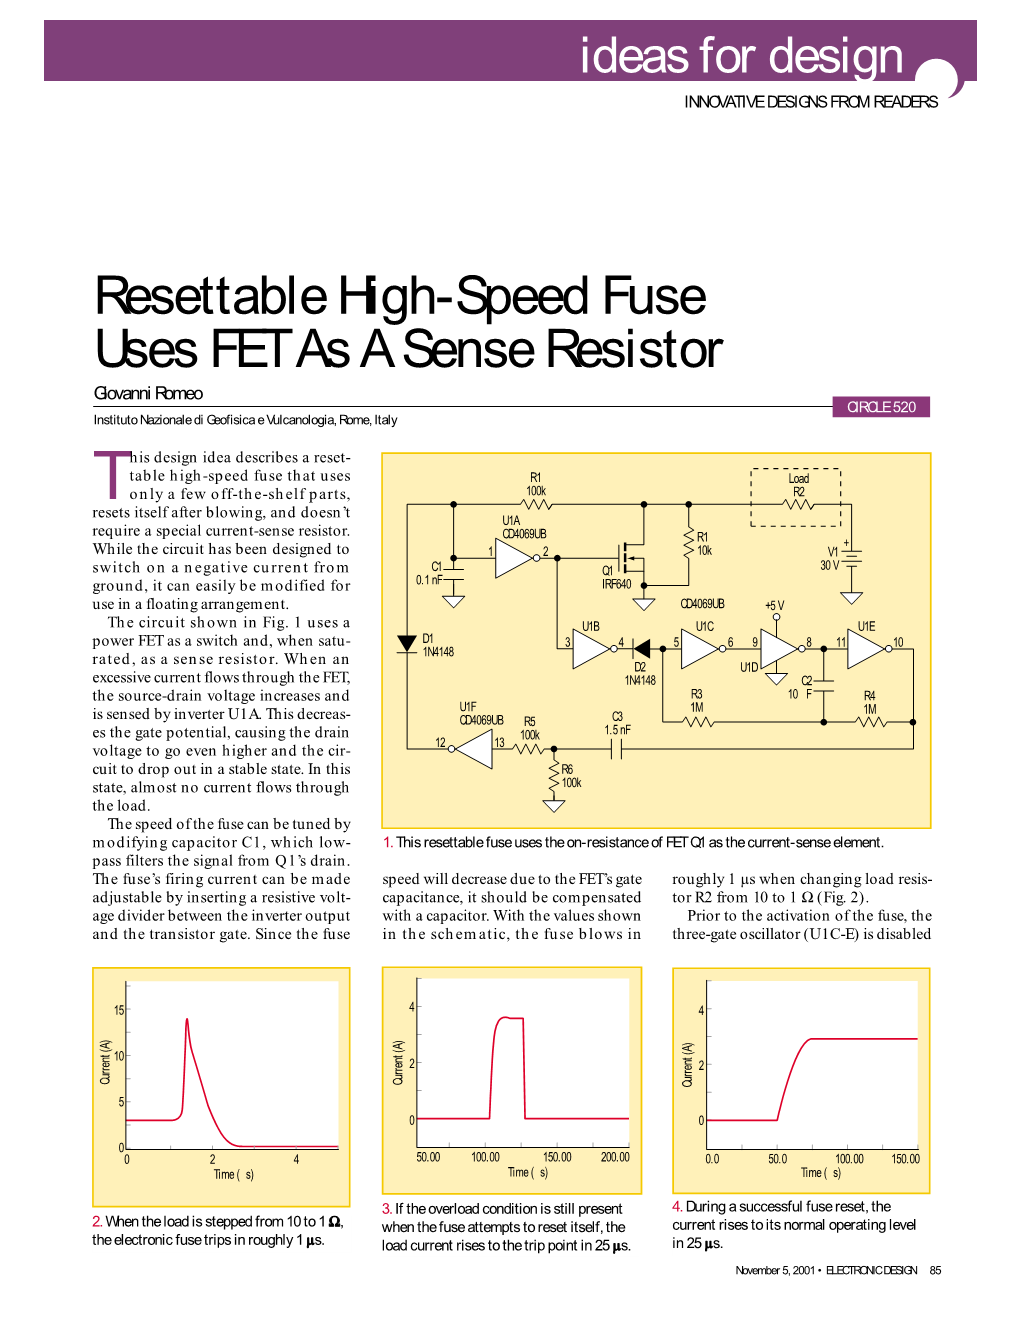 Resettable High-Speed Fuse Uses FET As a Sense Resistor Giovanni Romeo CIRCLE 520 Instituto Nazionale Di Geofisica E Vulcanologia, Rome, Italy